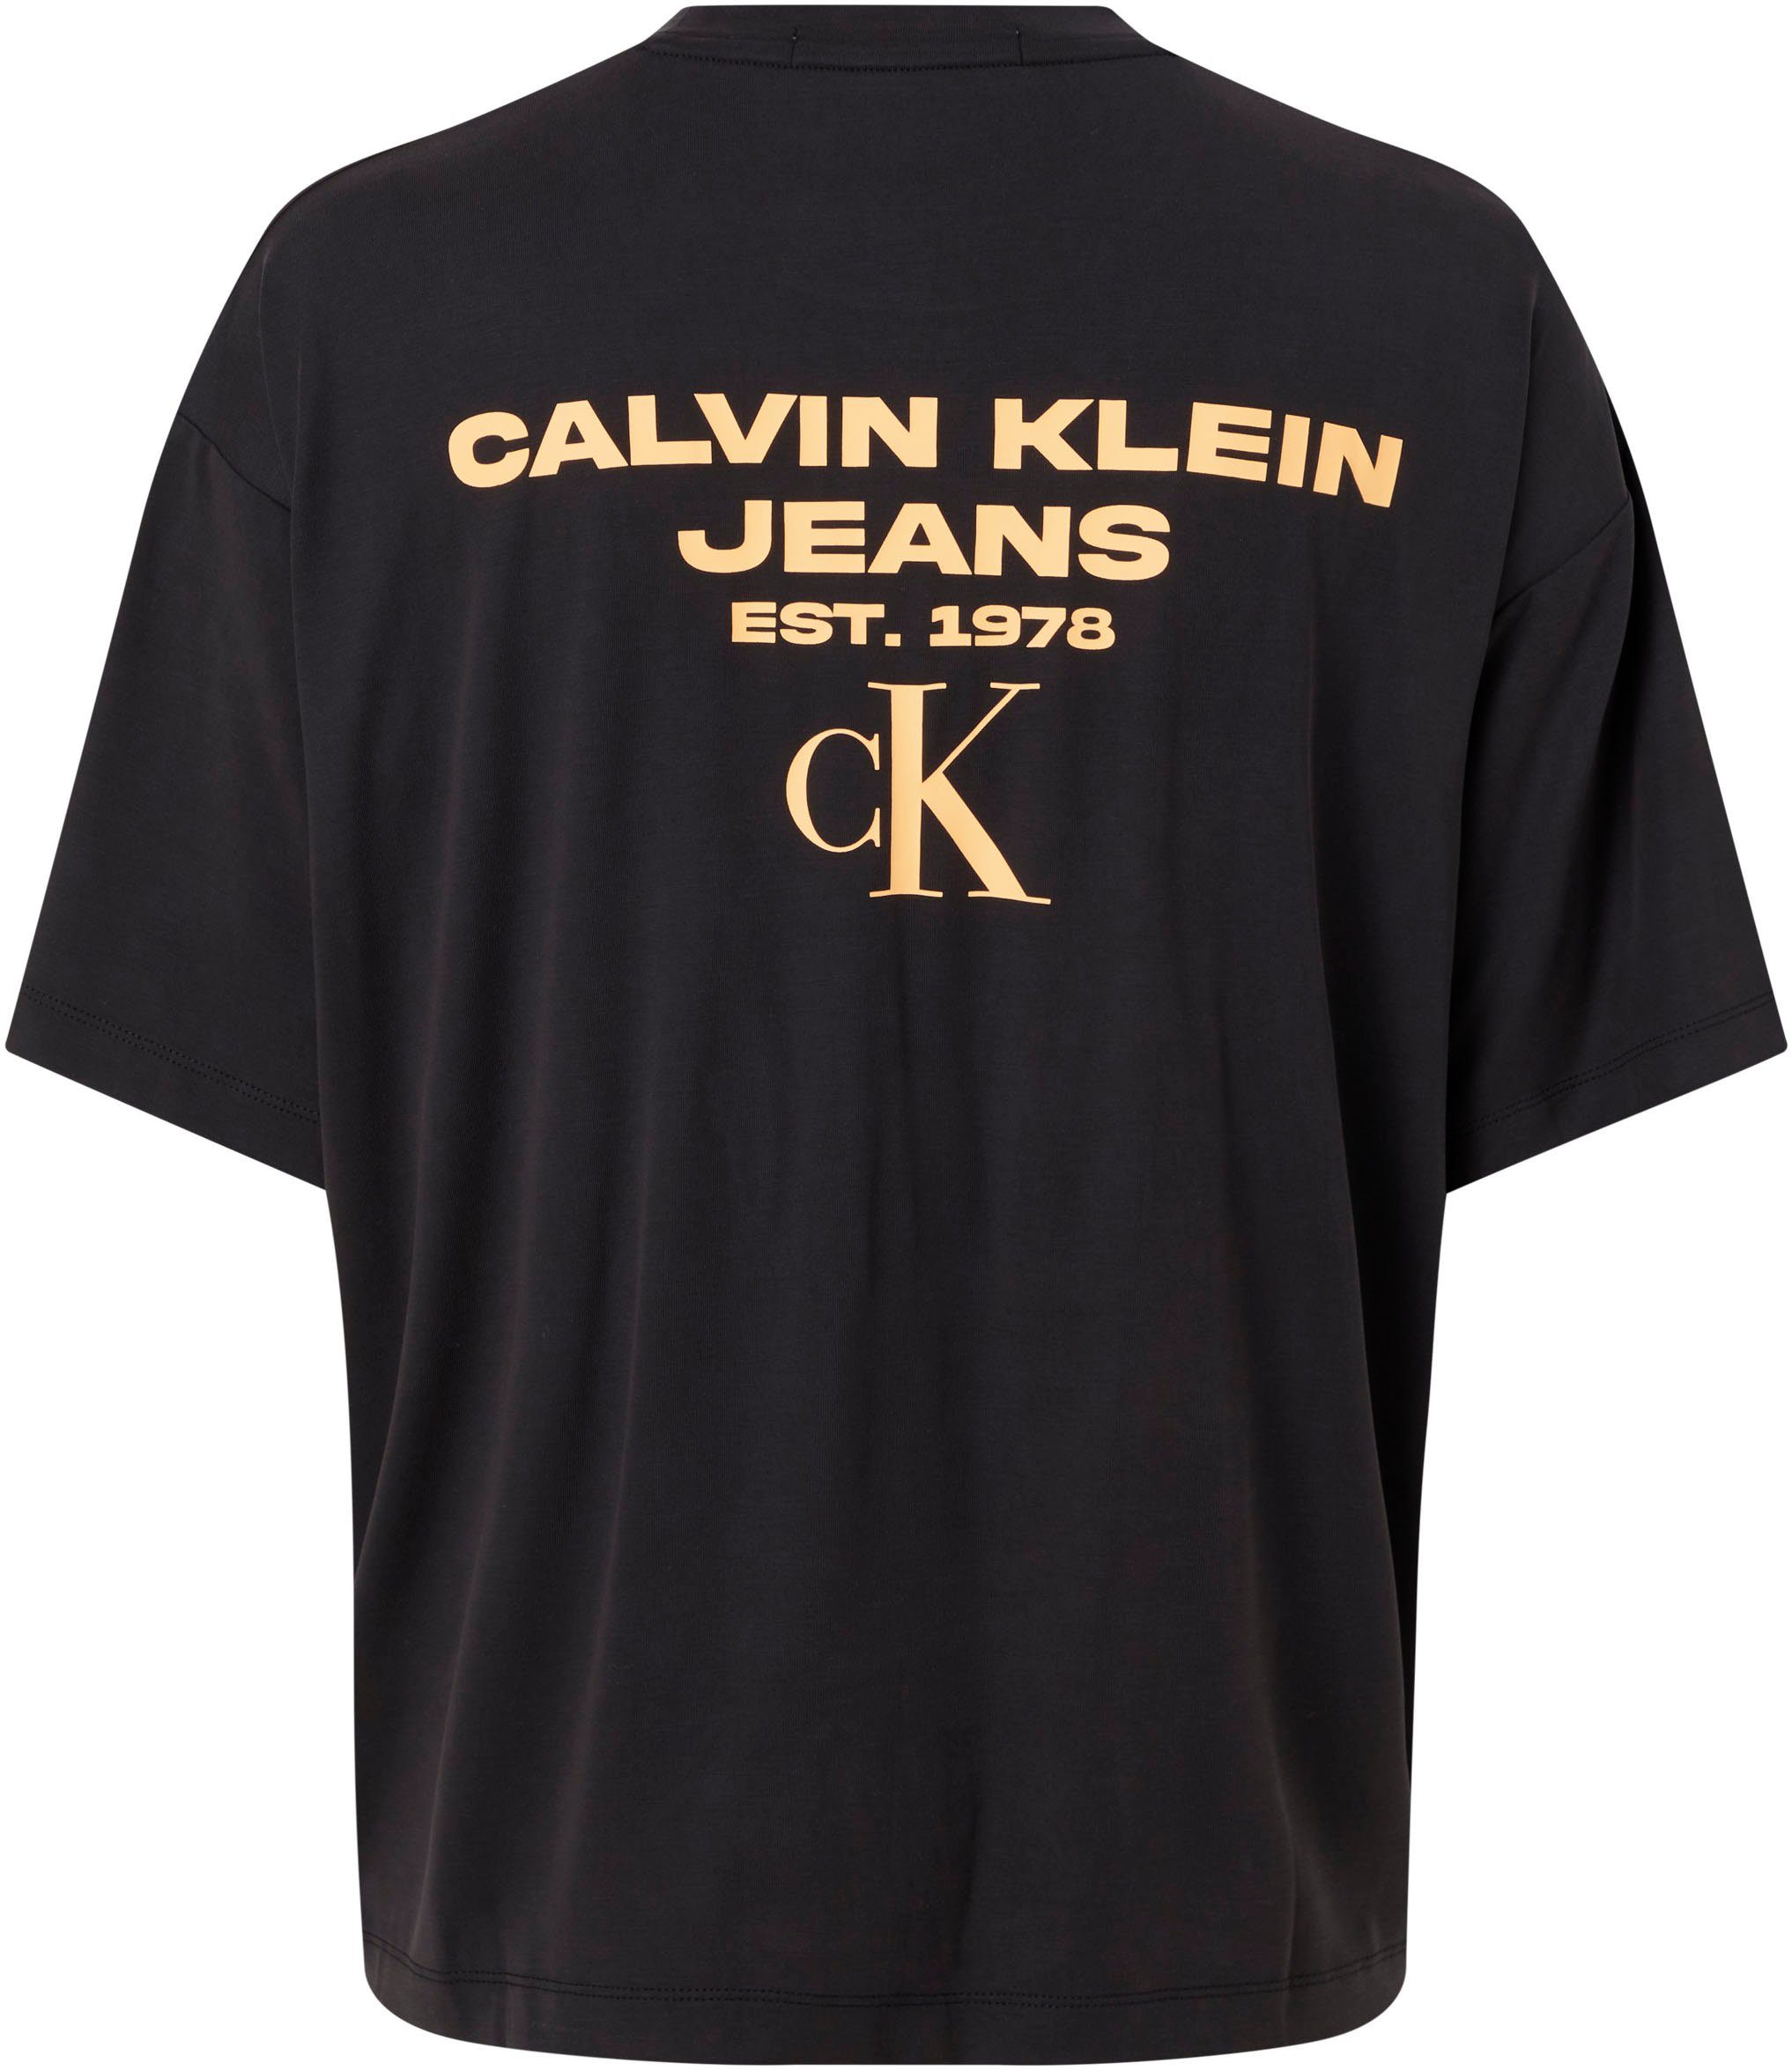 Klein BACK BOYFRIEND TEE T-Shirt MODAL LOGO Calvin Jeans